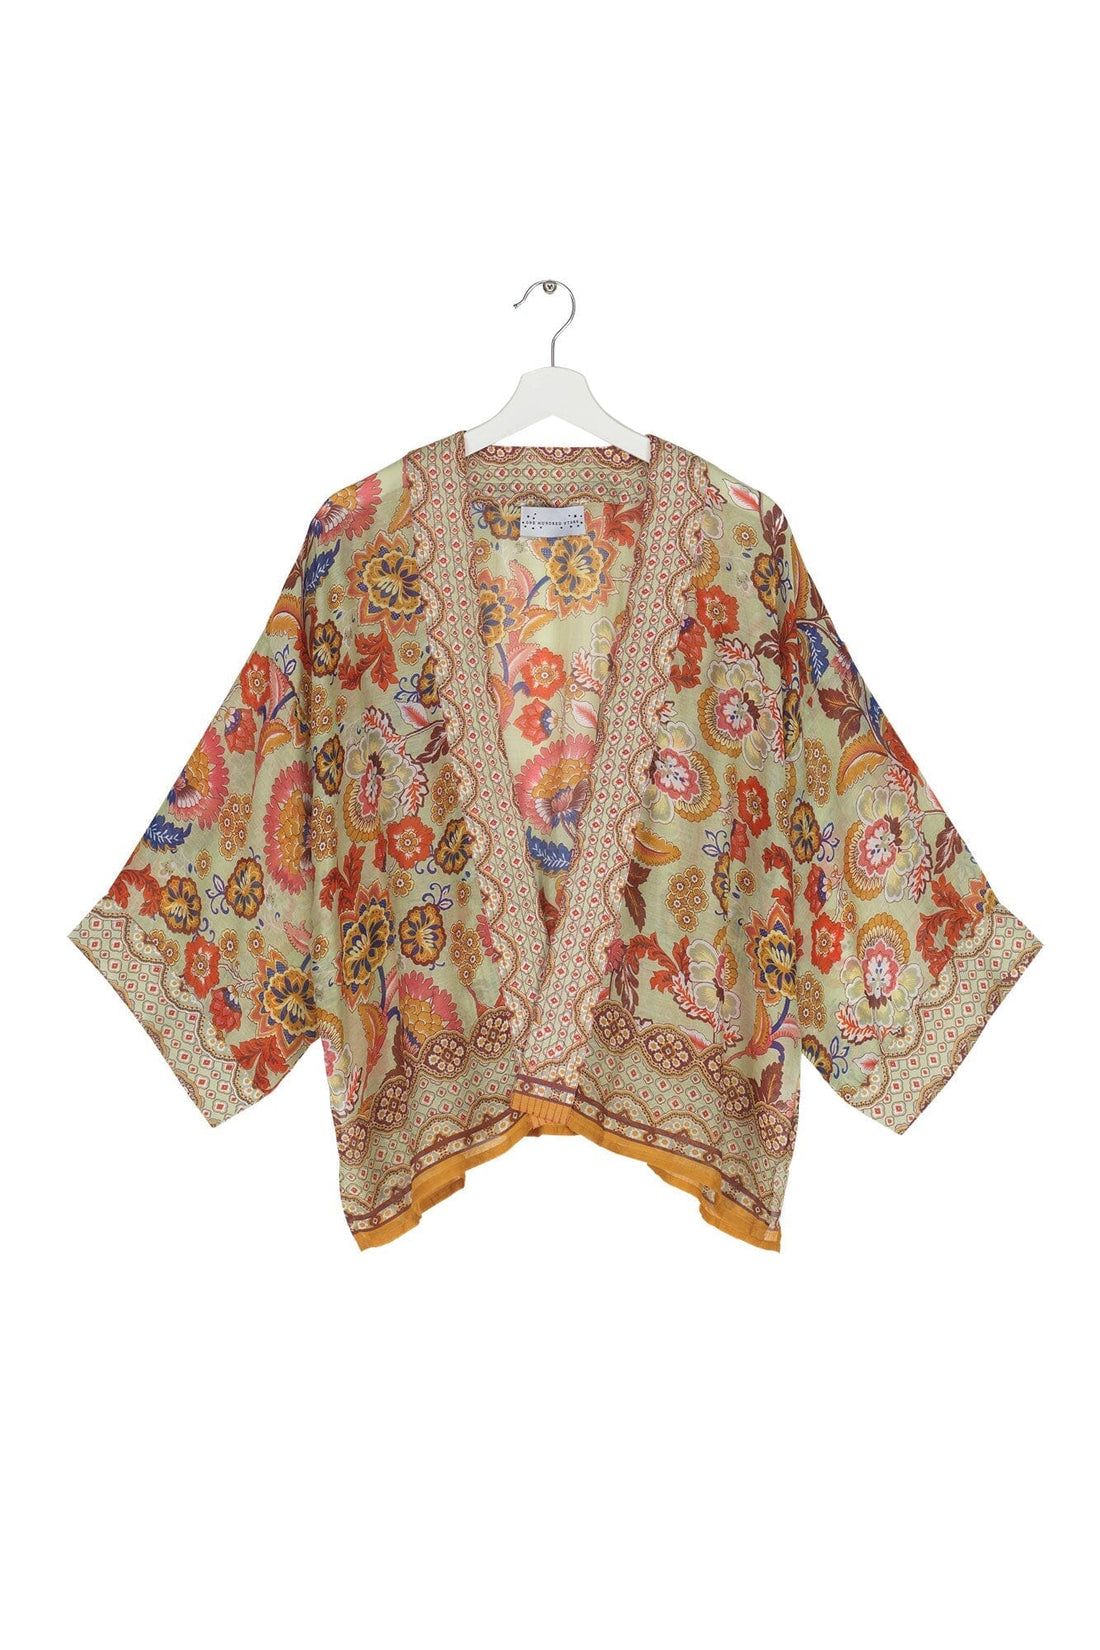 Short Lightweight Kimono in Indian Flower Taupe Print KIMINDTAU Kimonos One Hundred Stars